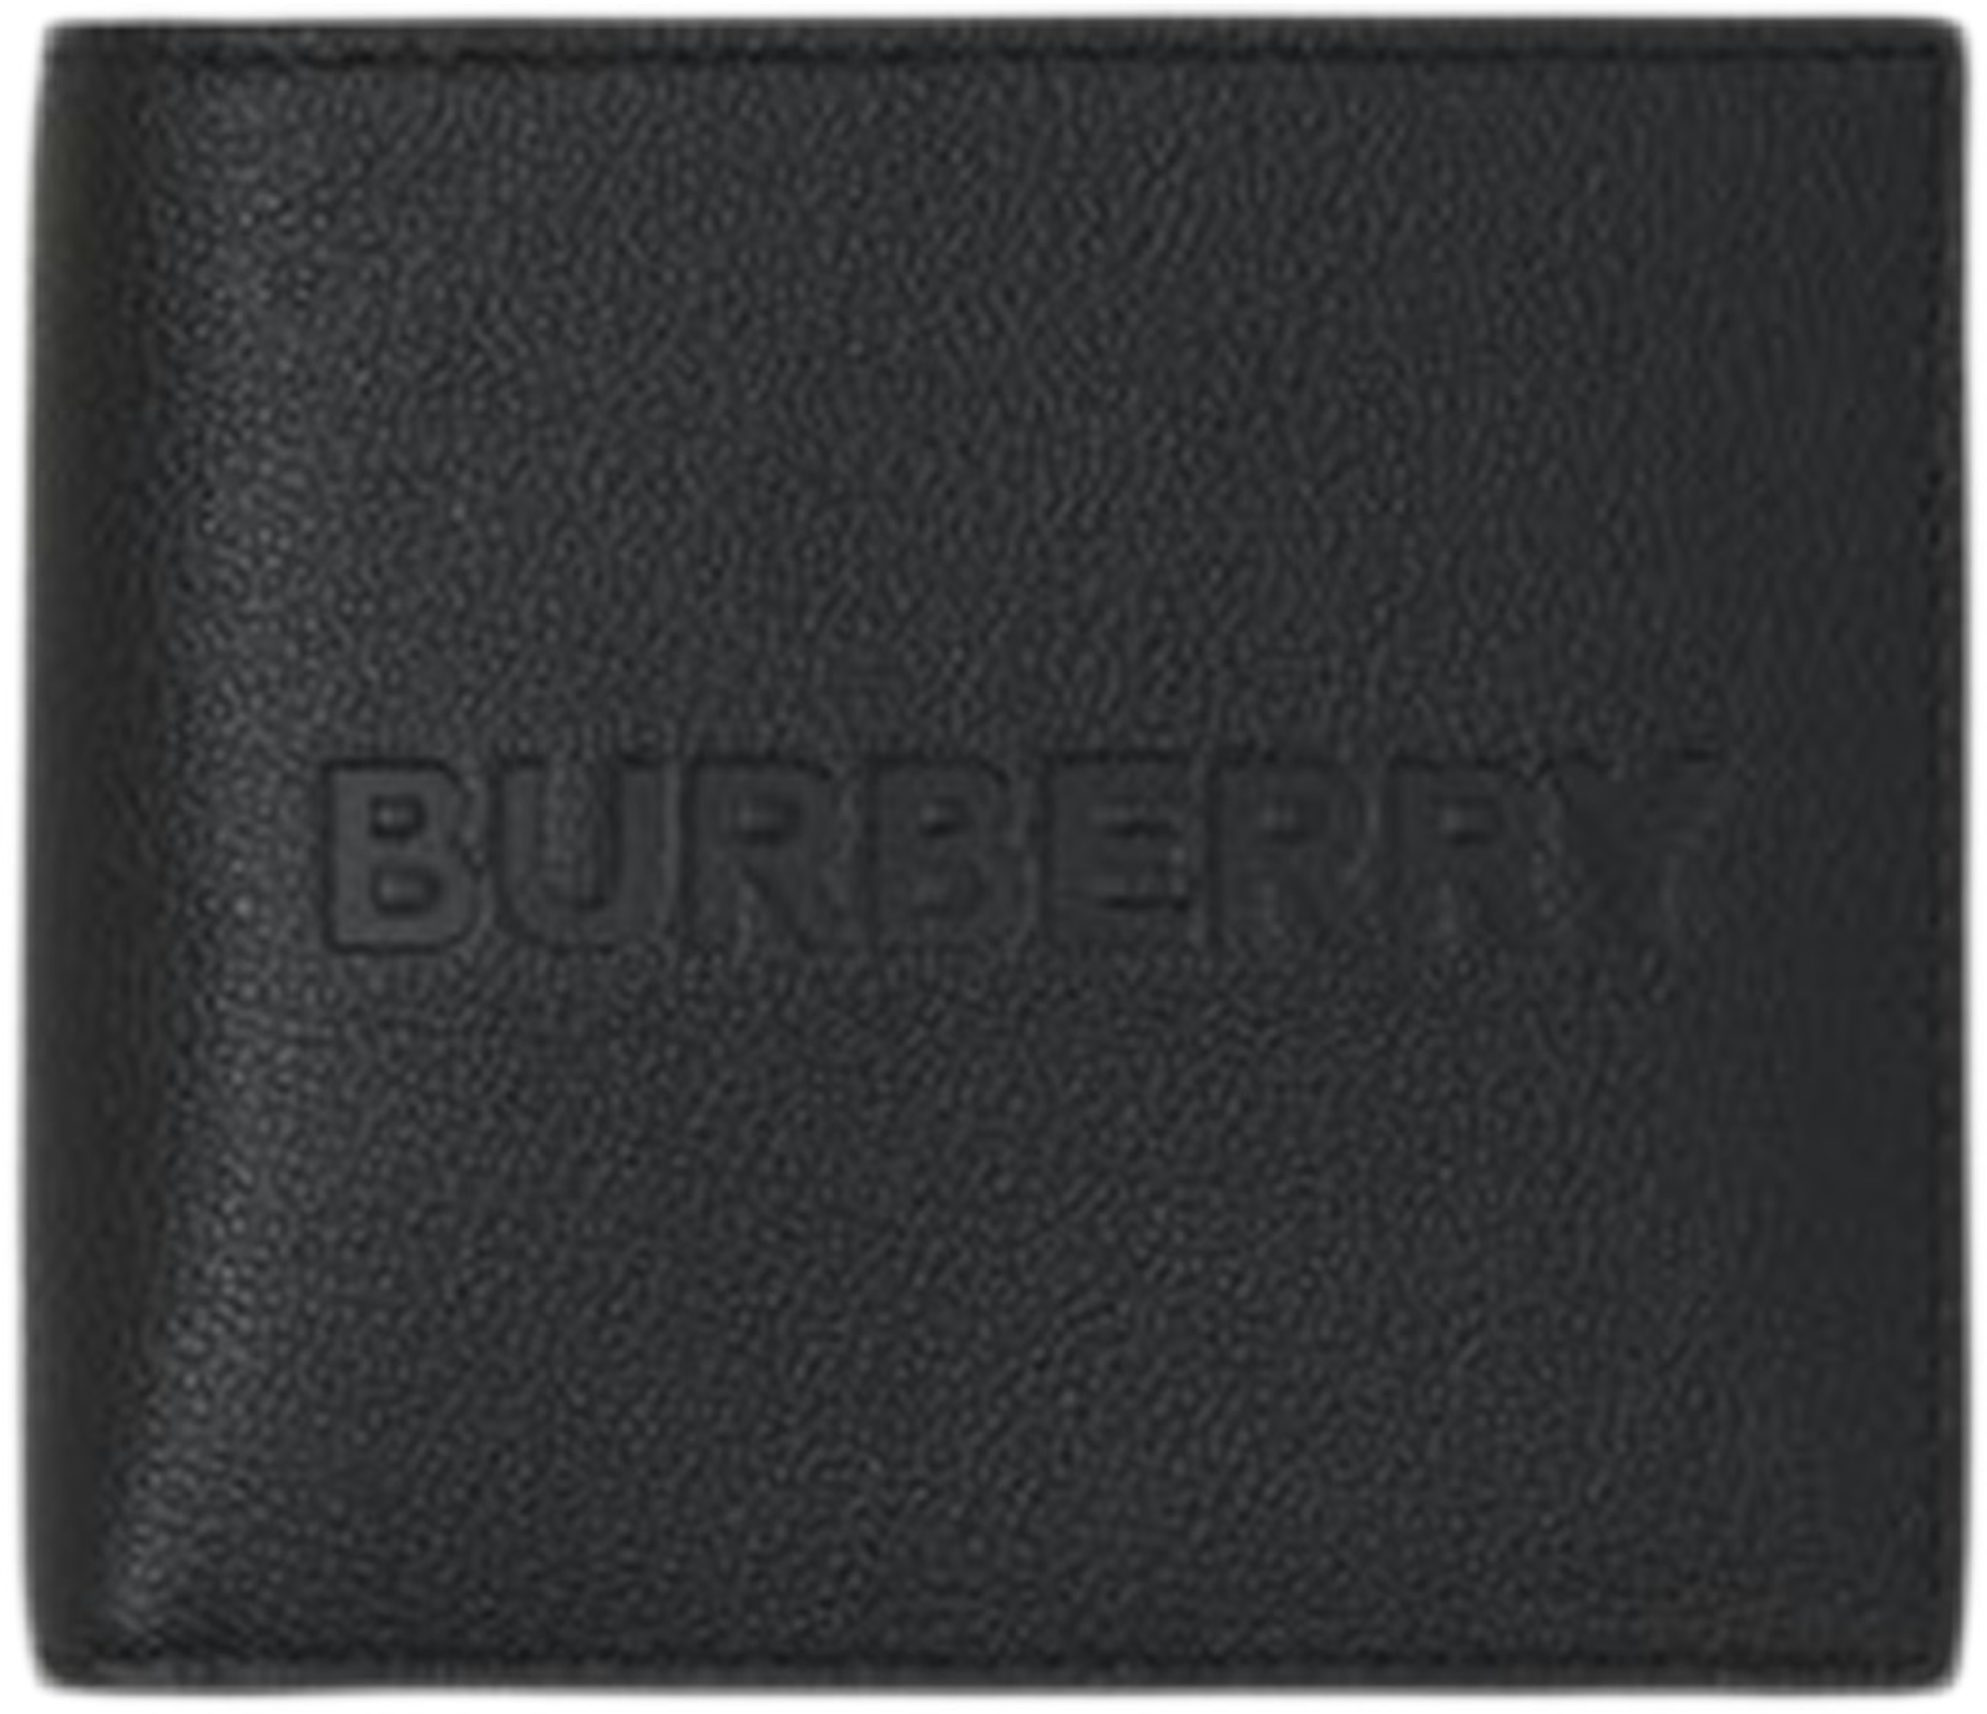 Burberry Grainy Leather TB Money Clip Wallet in Black - Men